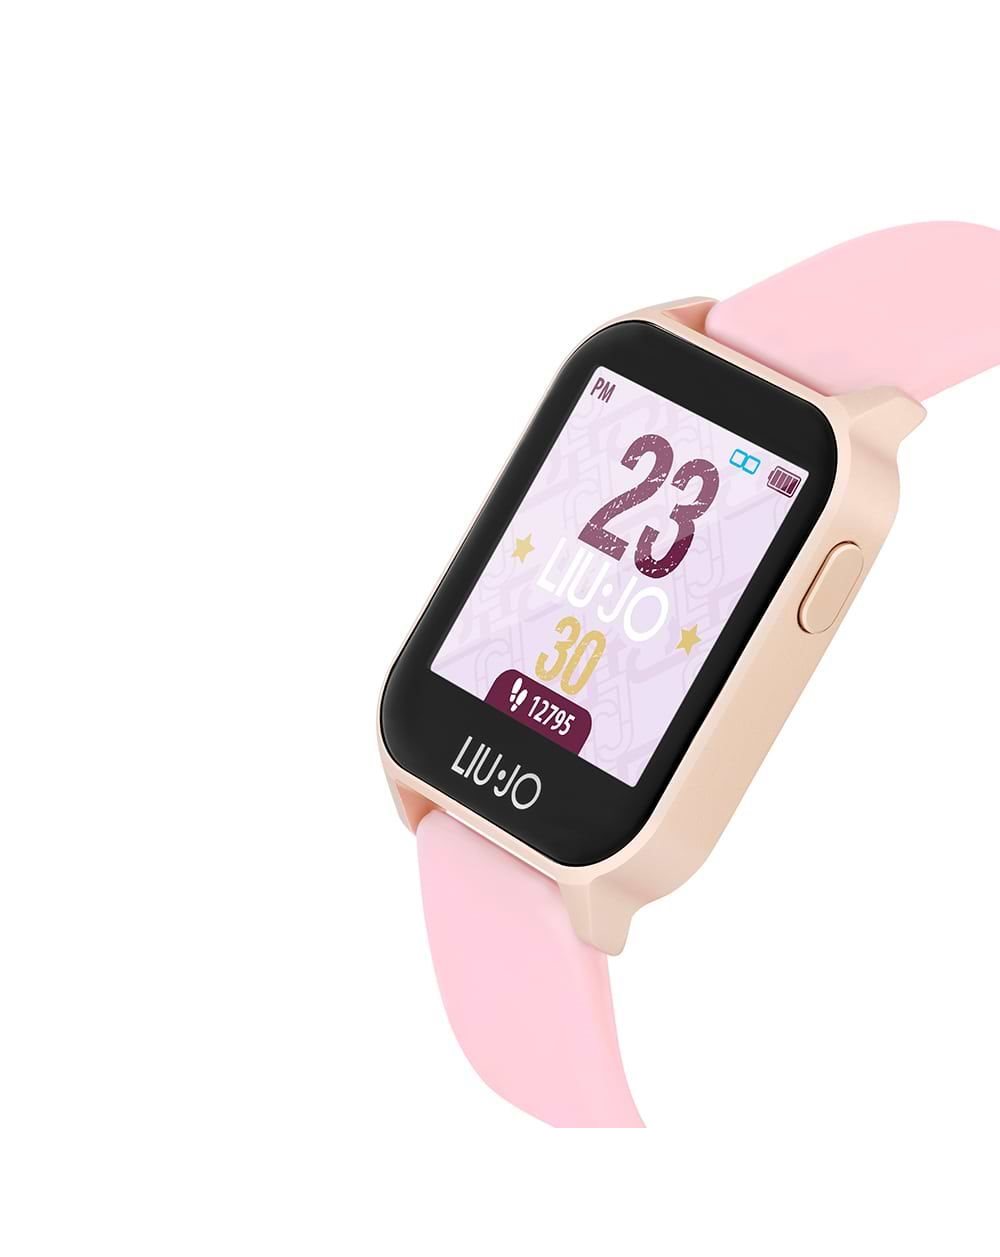 LIU-JO Smartwatch Android/IOS cinturino silicone rosa touchscreen